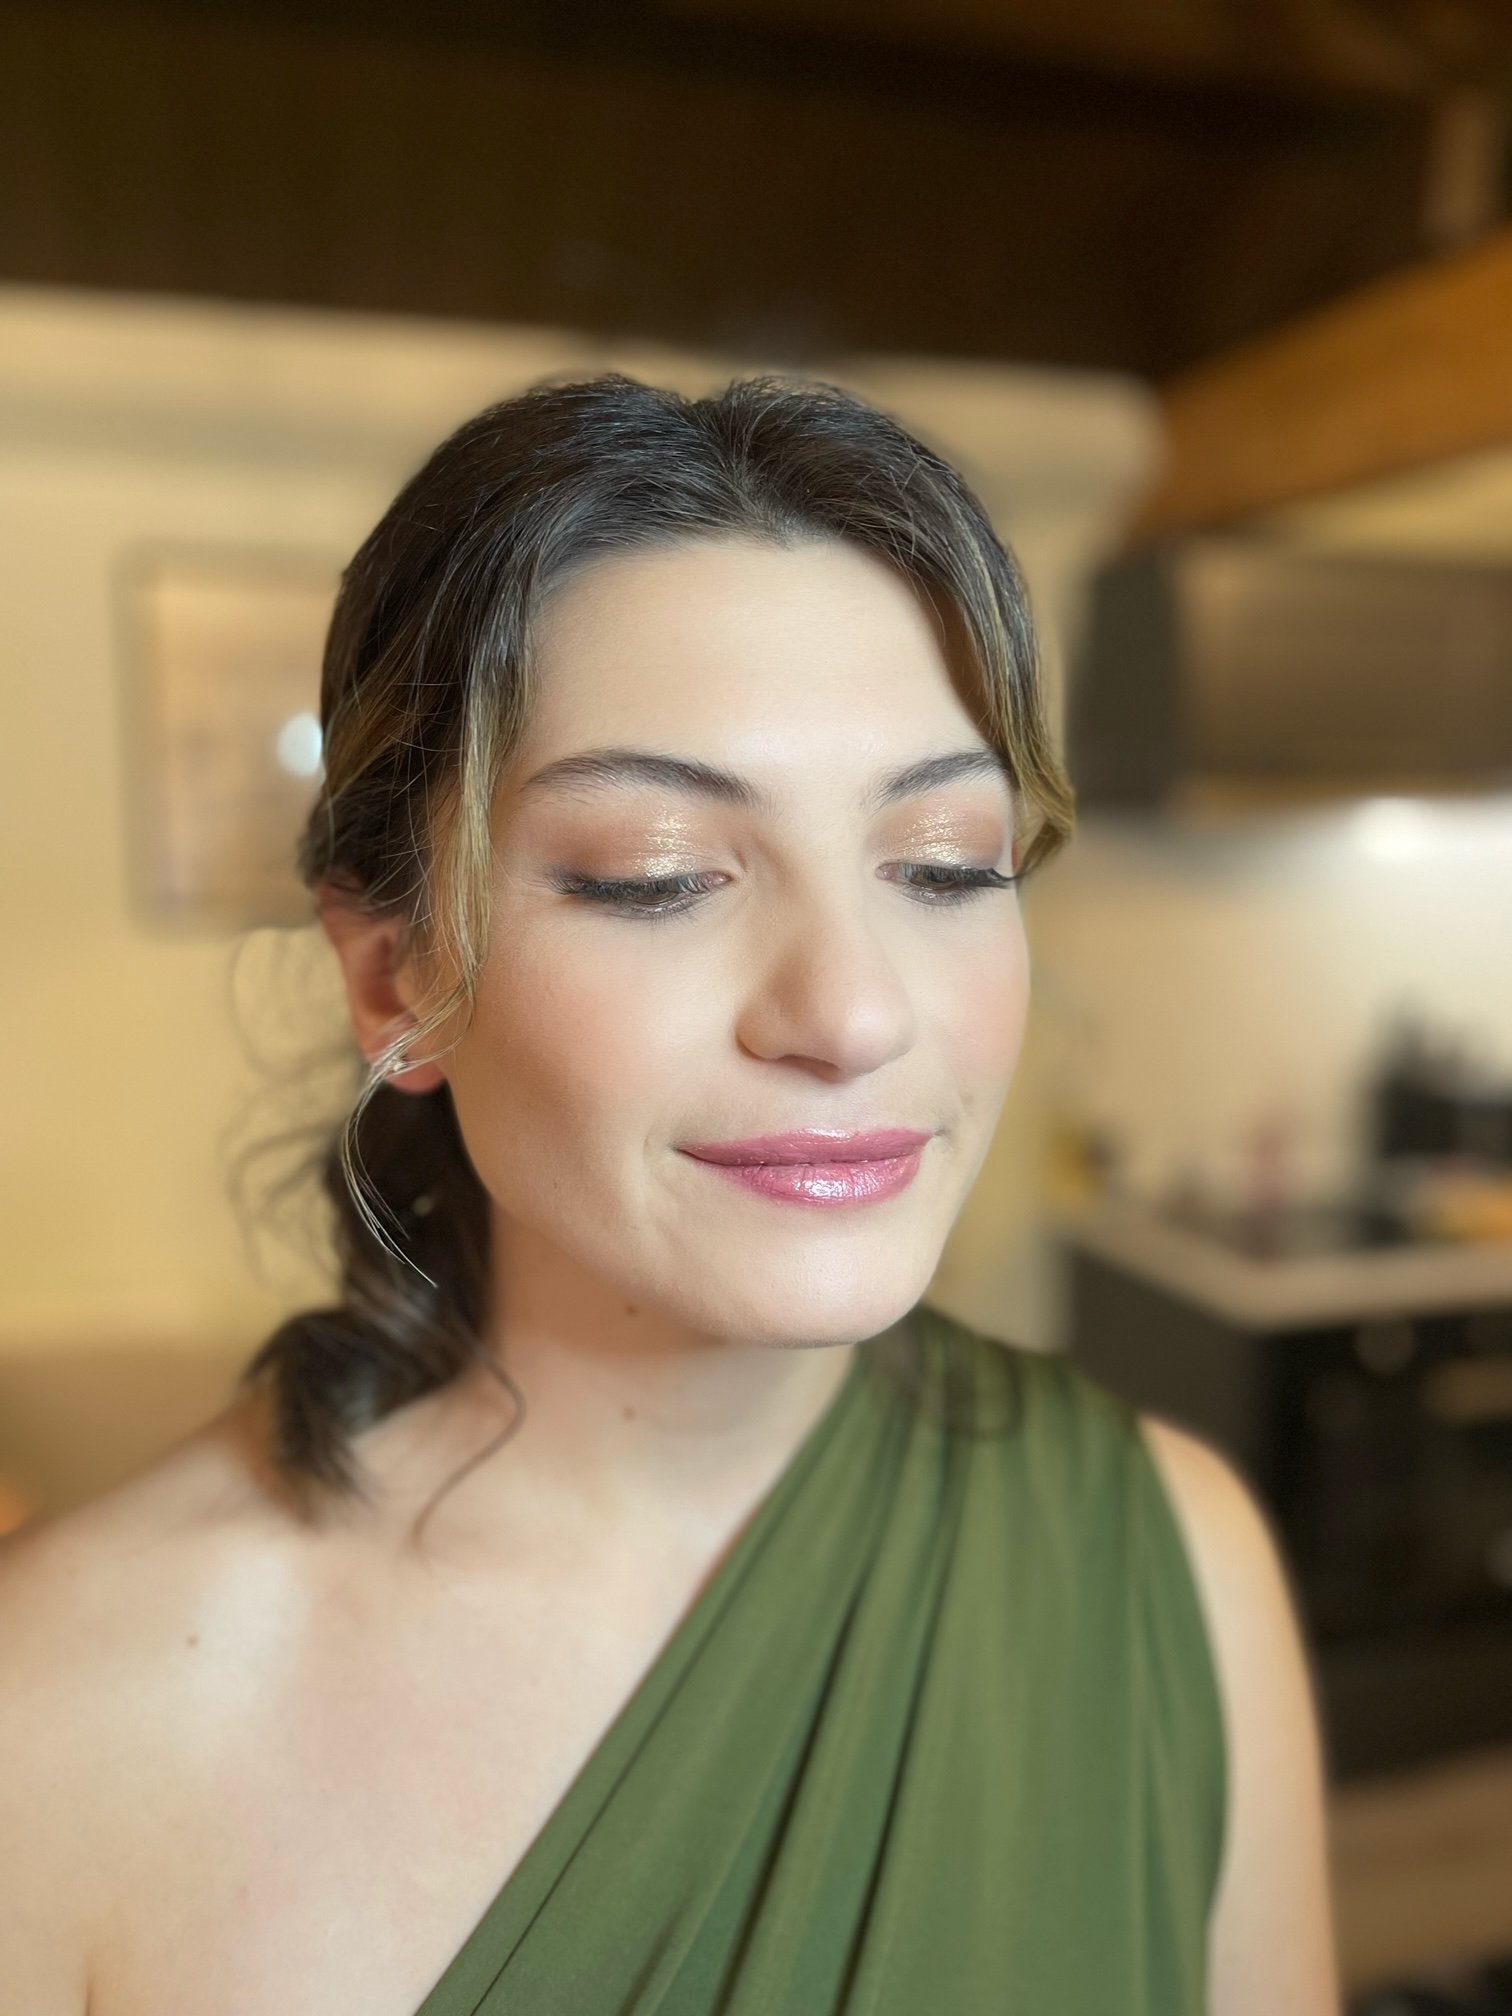 Makeup for wedding guest